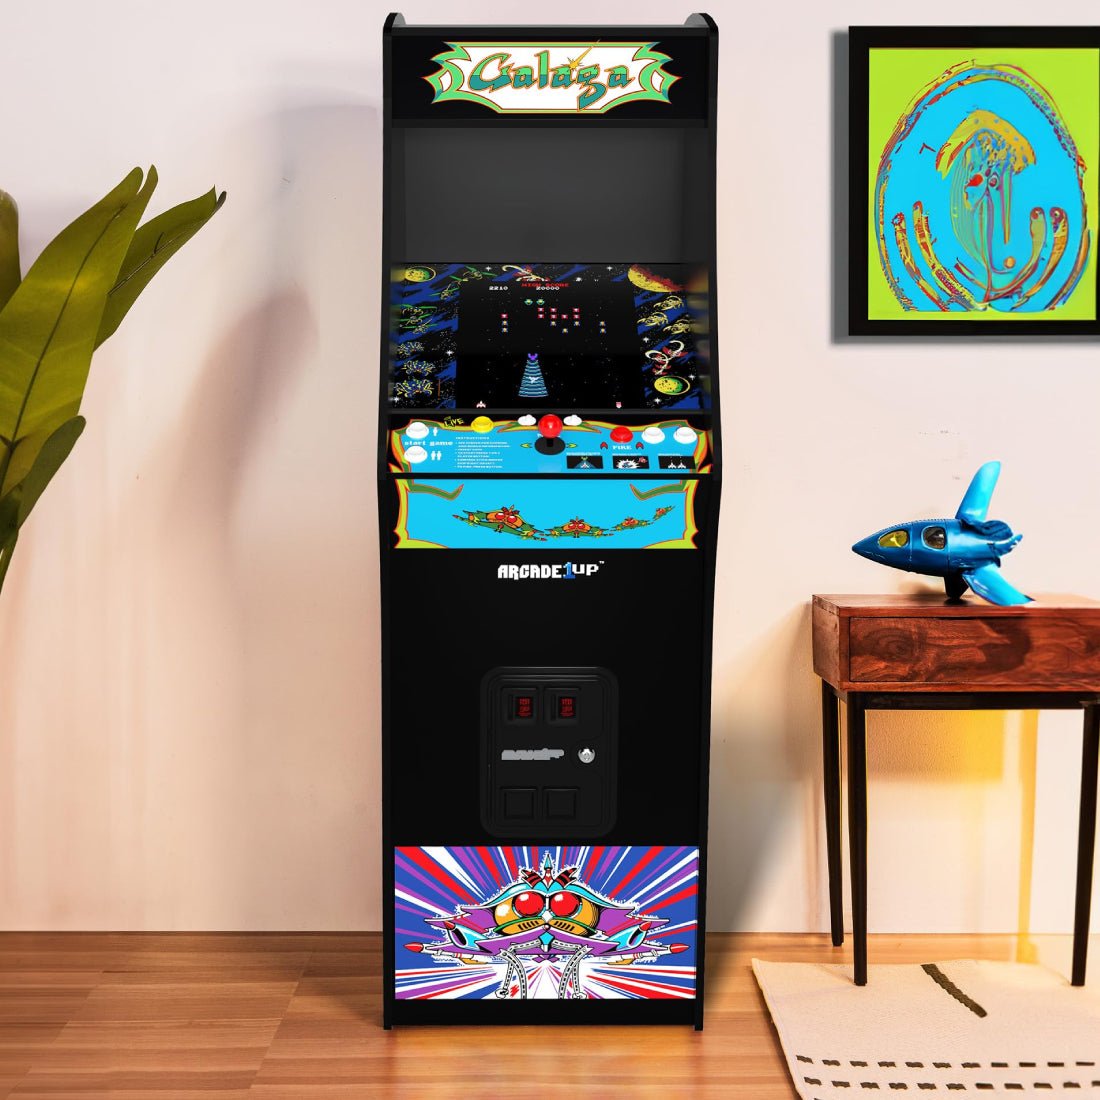 Arcade1Up Galaga Deluxe Arcade Machine - ماكينة ألعاب - Store 974 | ستور ٩٧٤